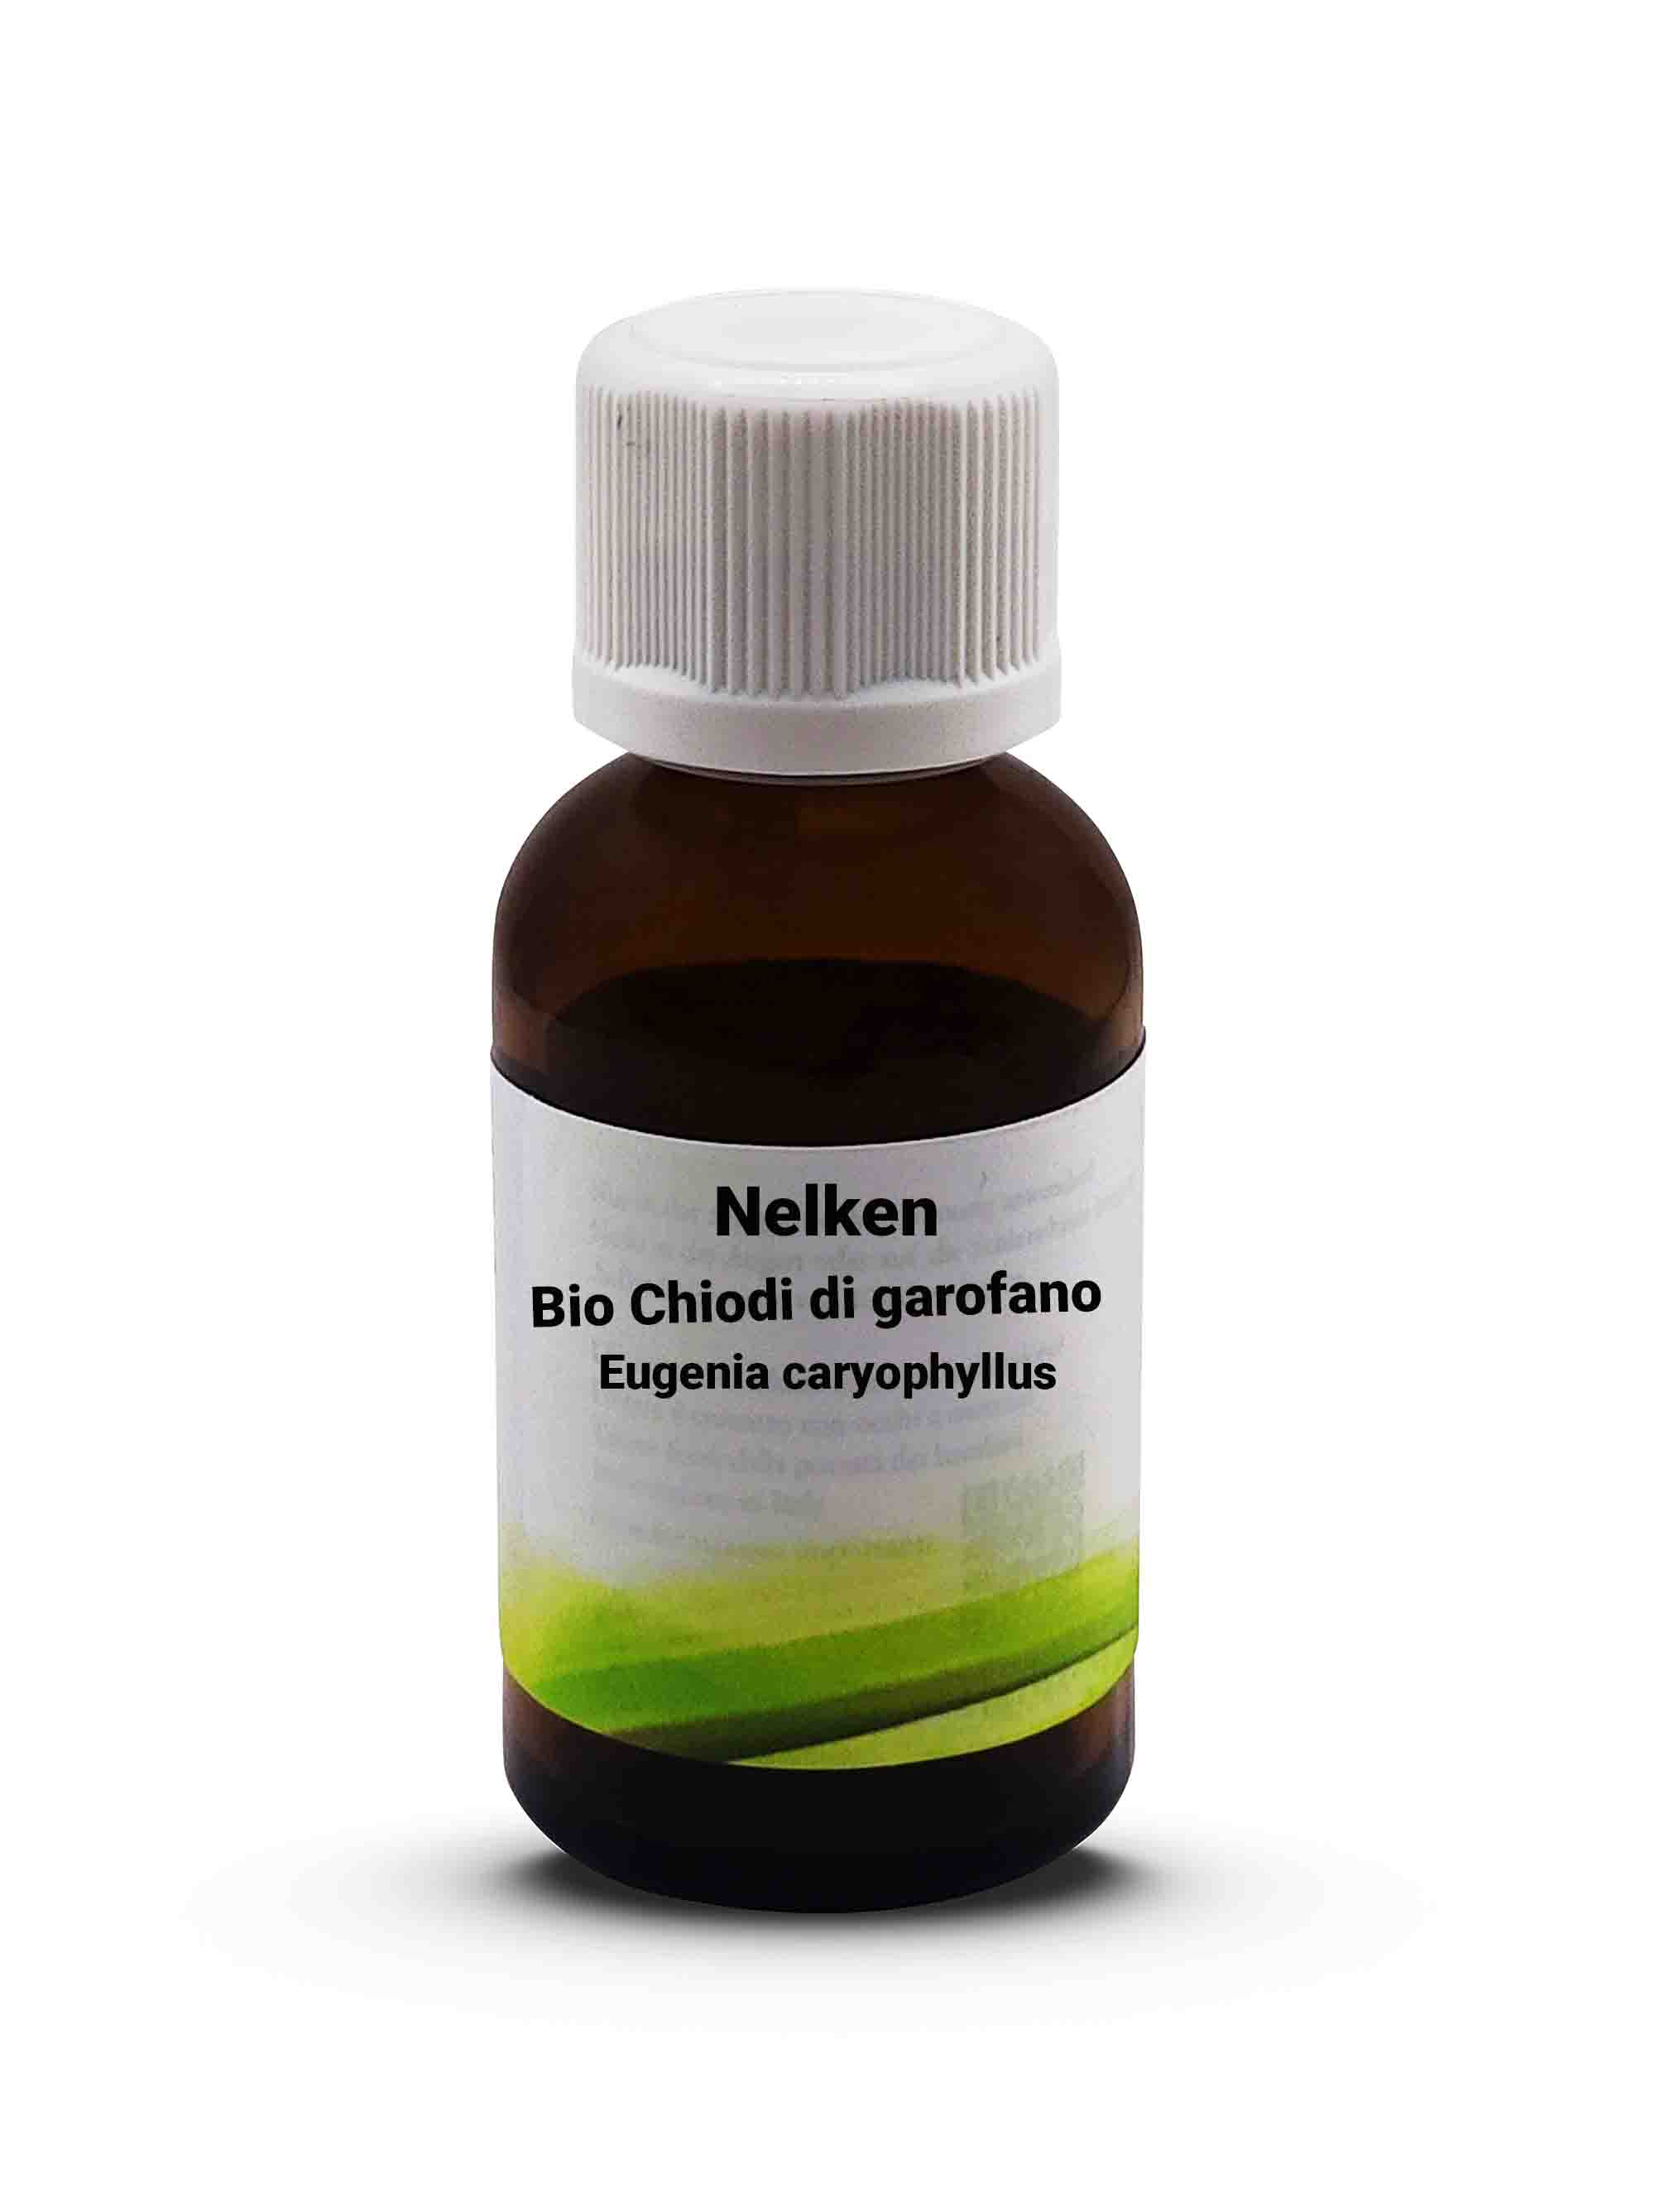 Nelken Bio Chiodi di garofano - Eugenia caryophyllus 30 ml